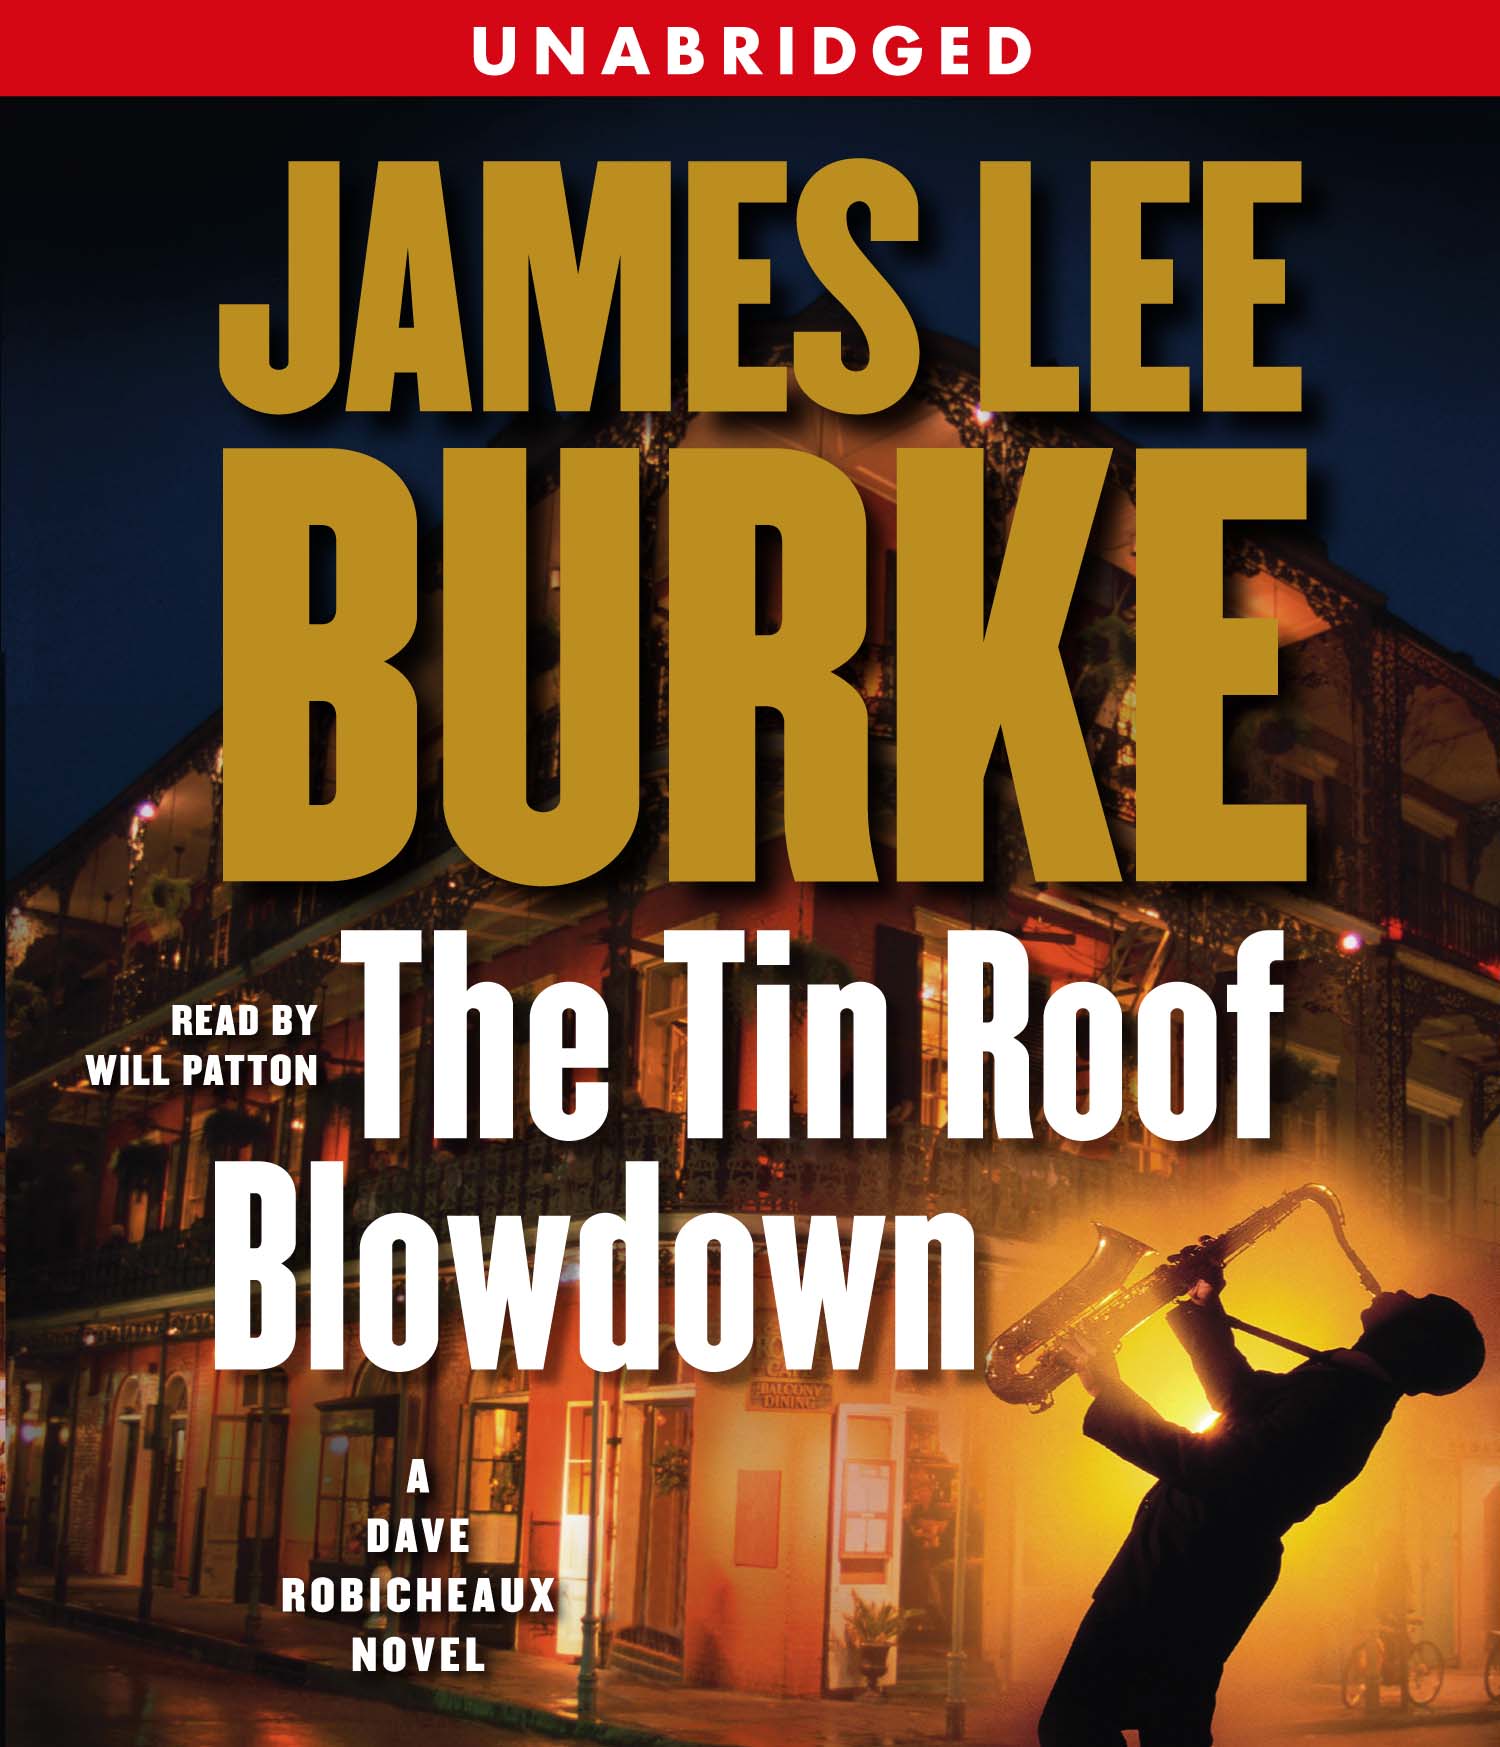 Tin Roof Blowdown